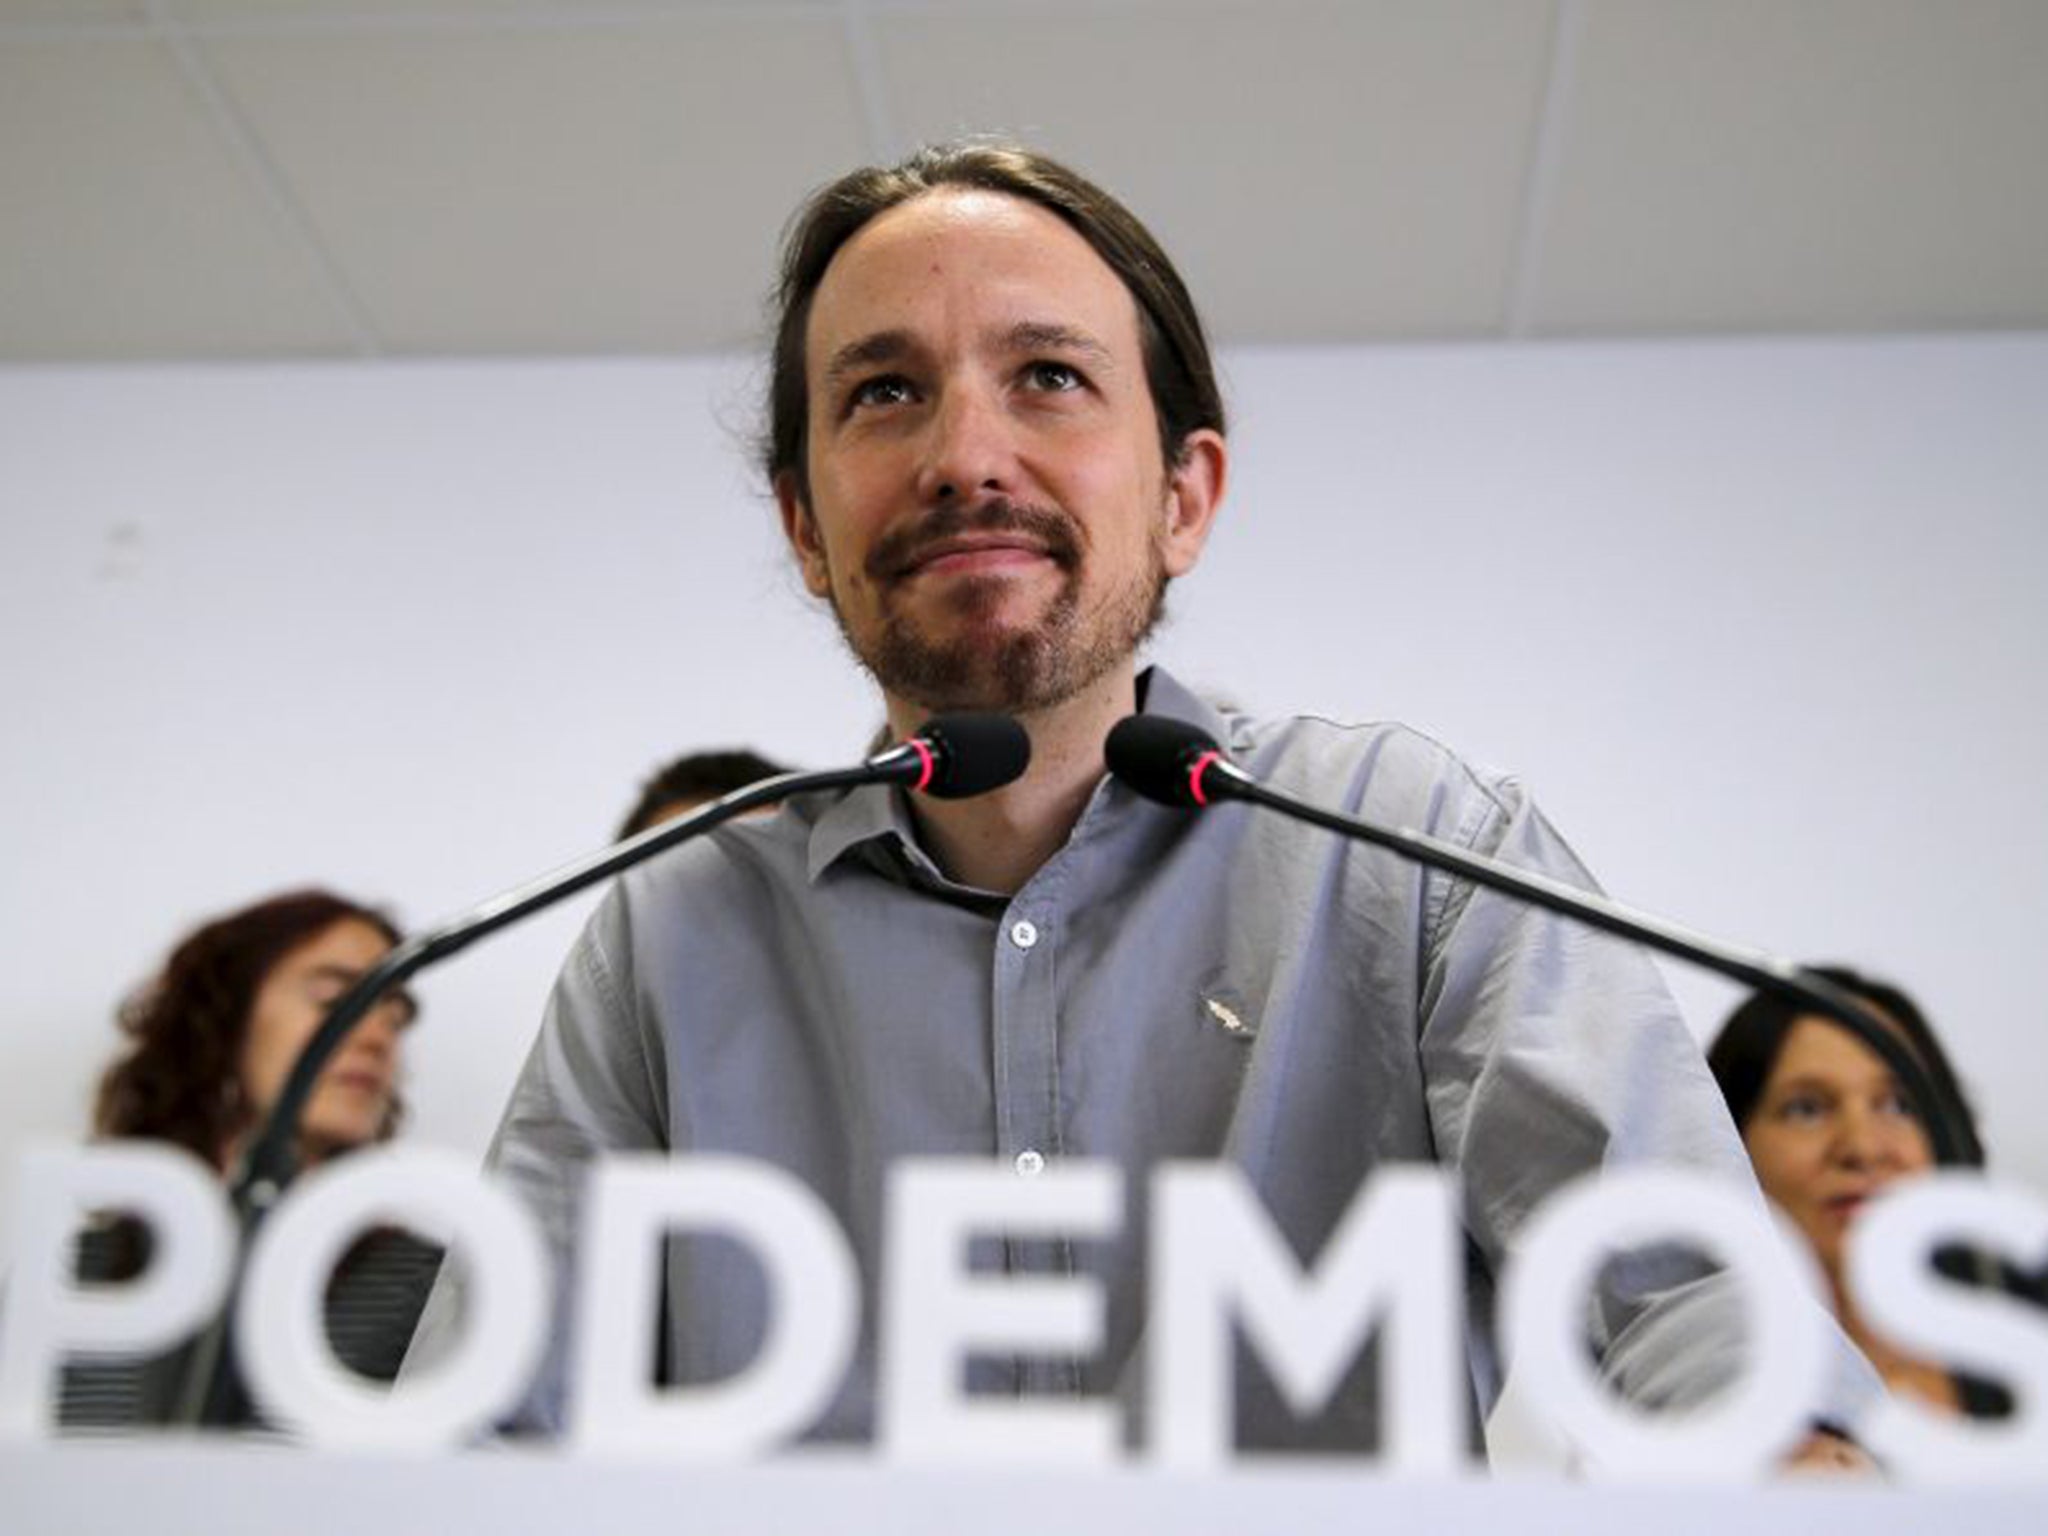 Pablo Iglesias, the leader of Spain’s anti-austerity party Podemos